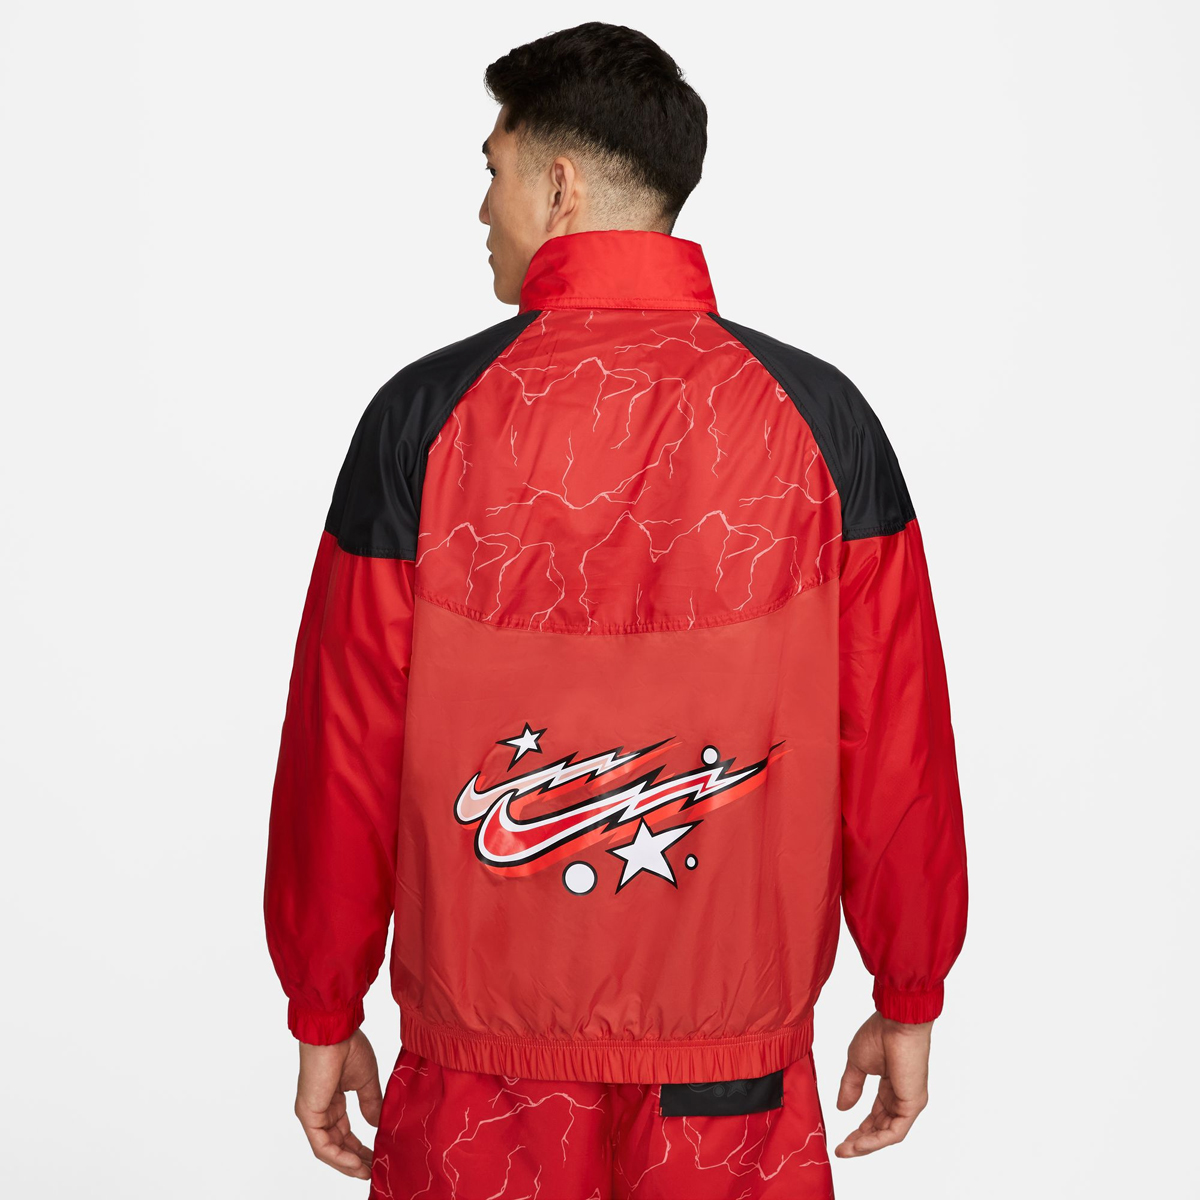 Nike-Electric-High-Jacket-Red-Black-2